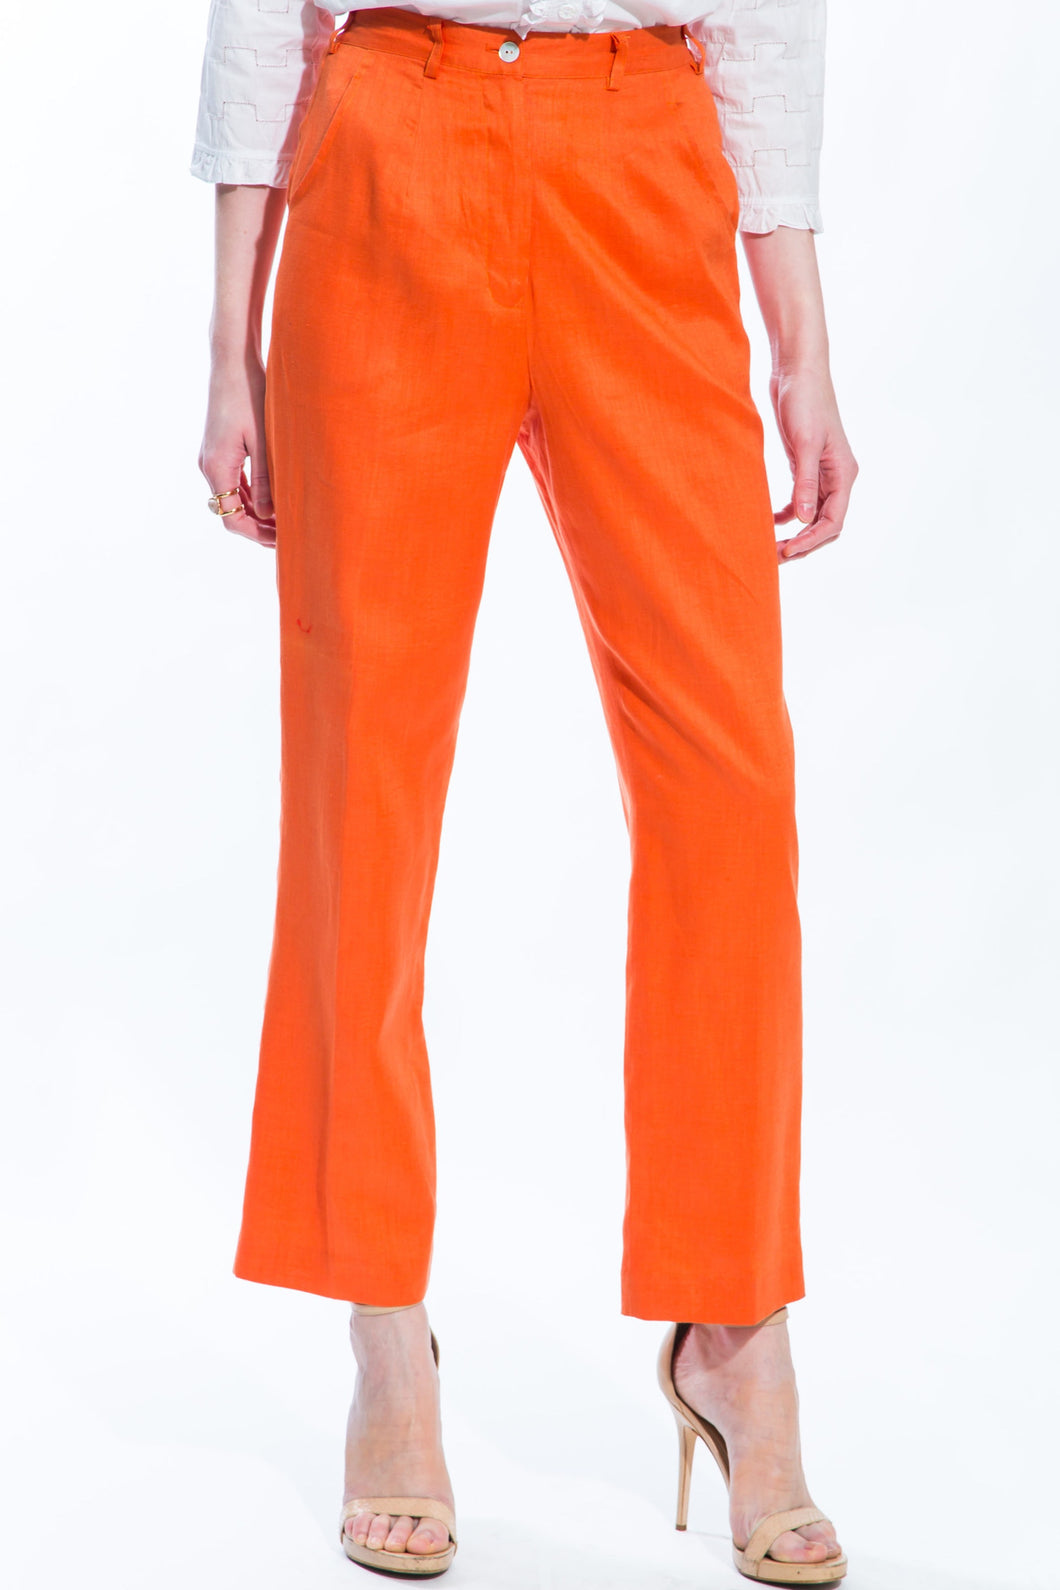 Cropped Linen Pants (Orange) Style 1150